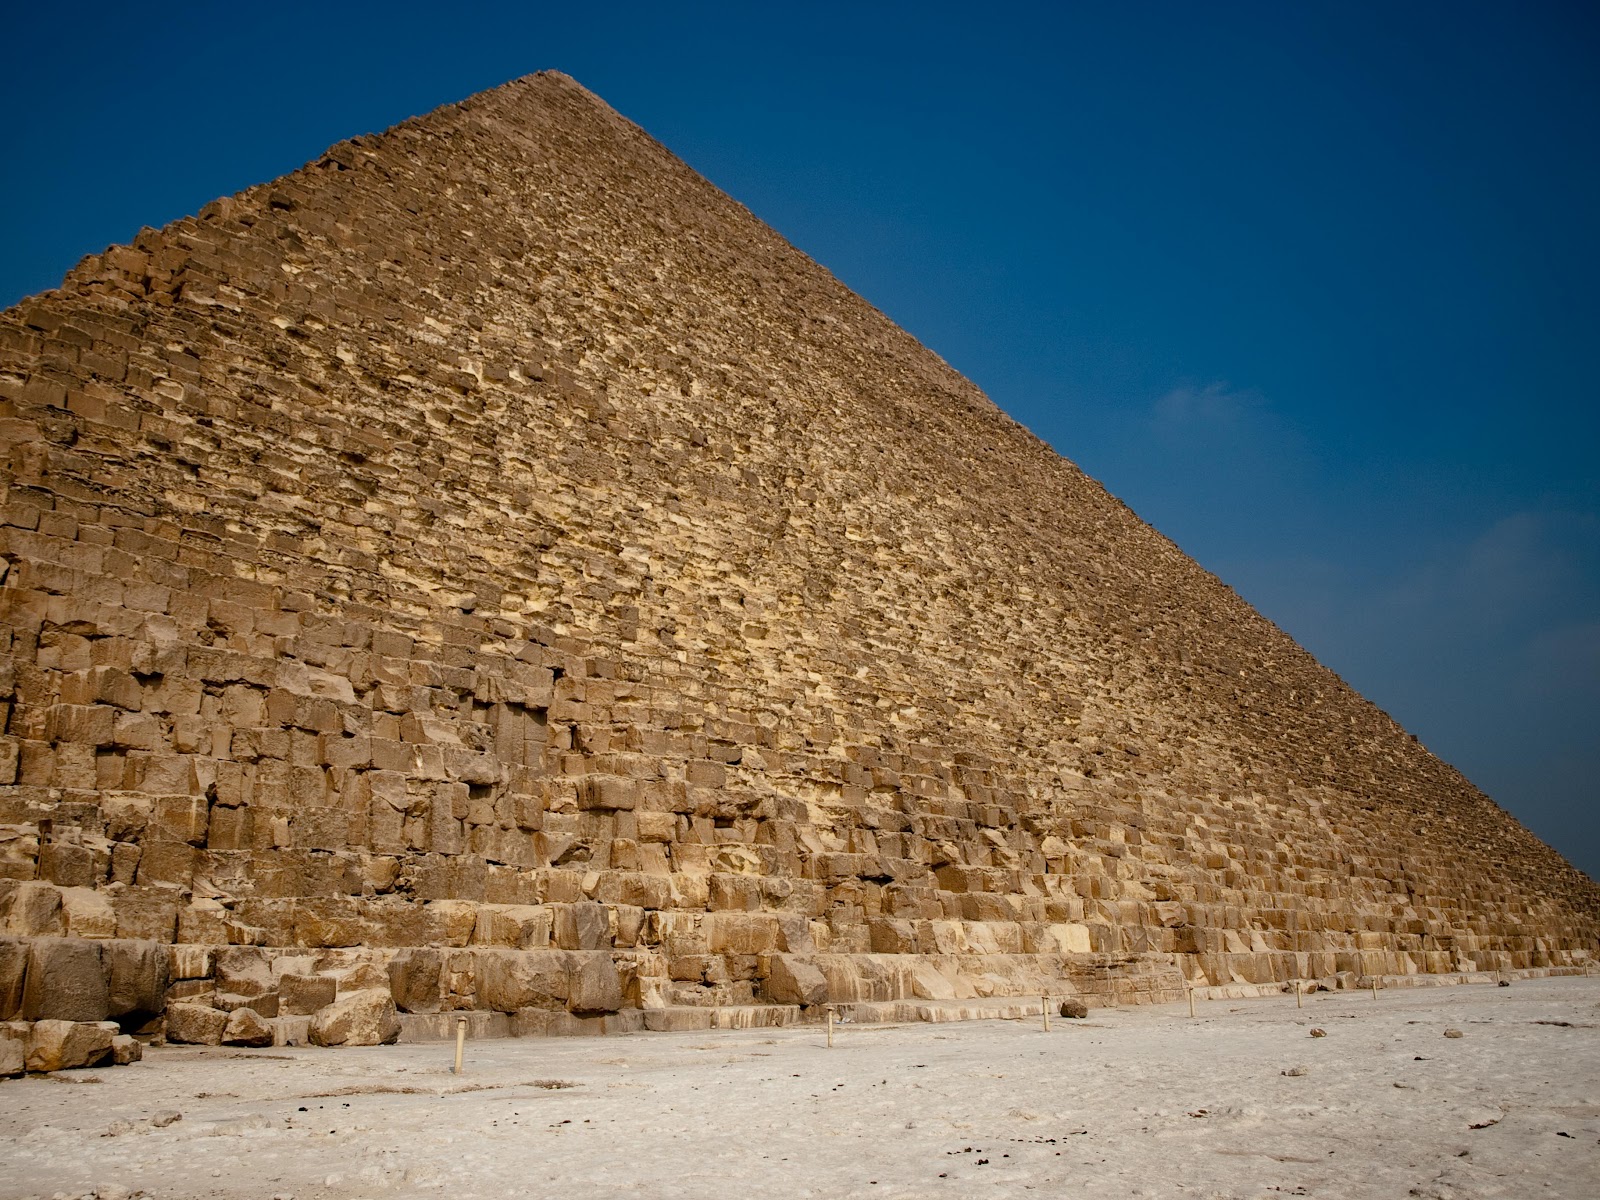 Photography: The Pyramids of Giza